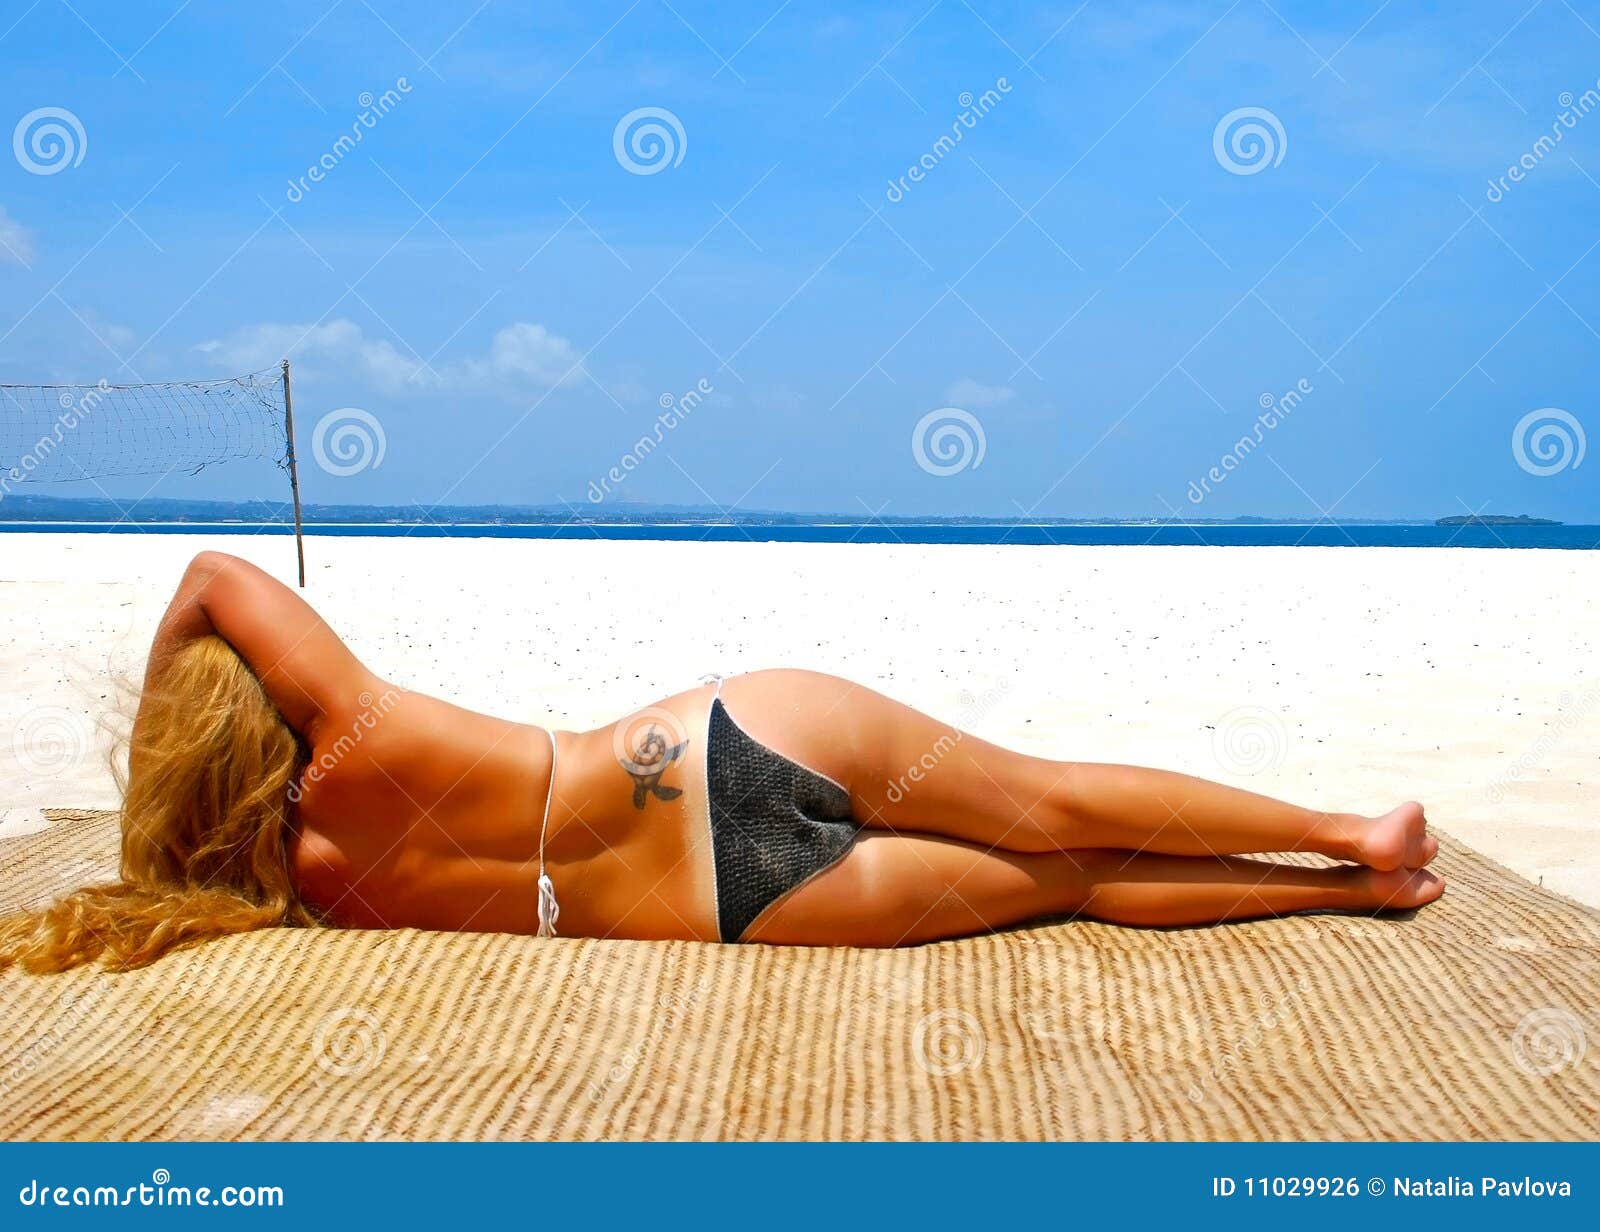 Woman on the beach. Girl taking sunbath, Zanzibar beach, Africa